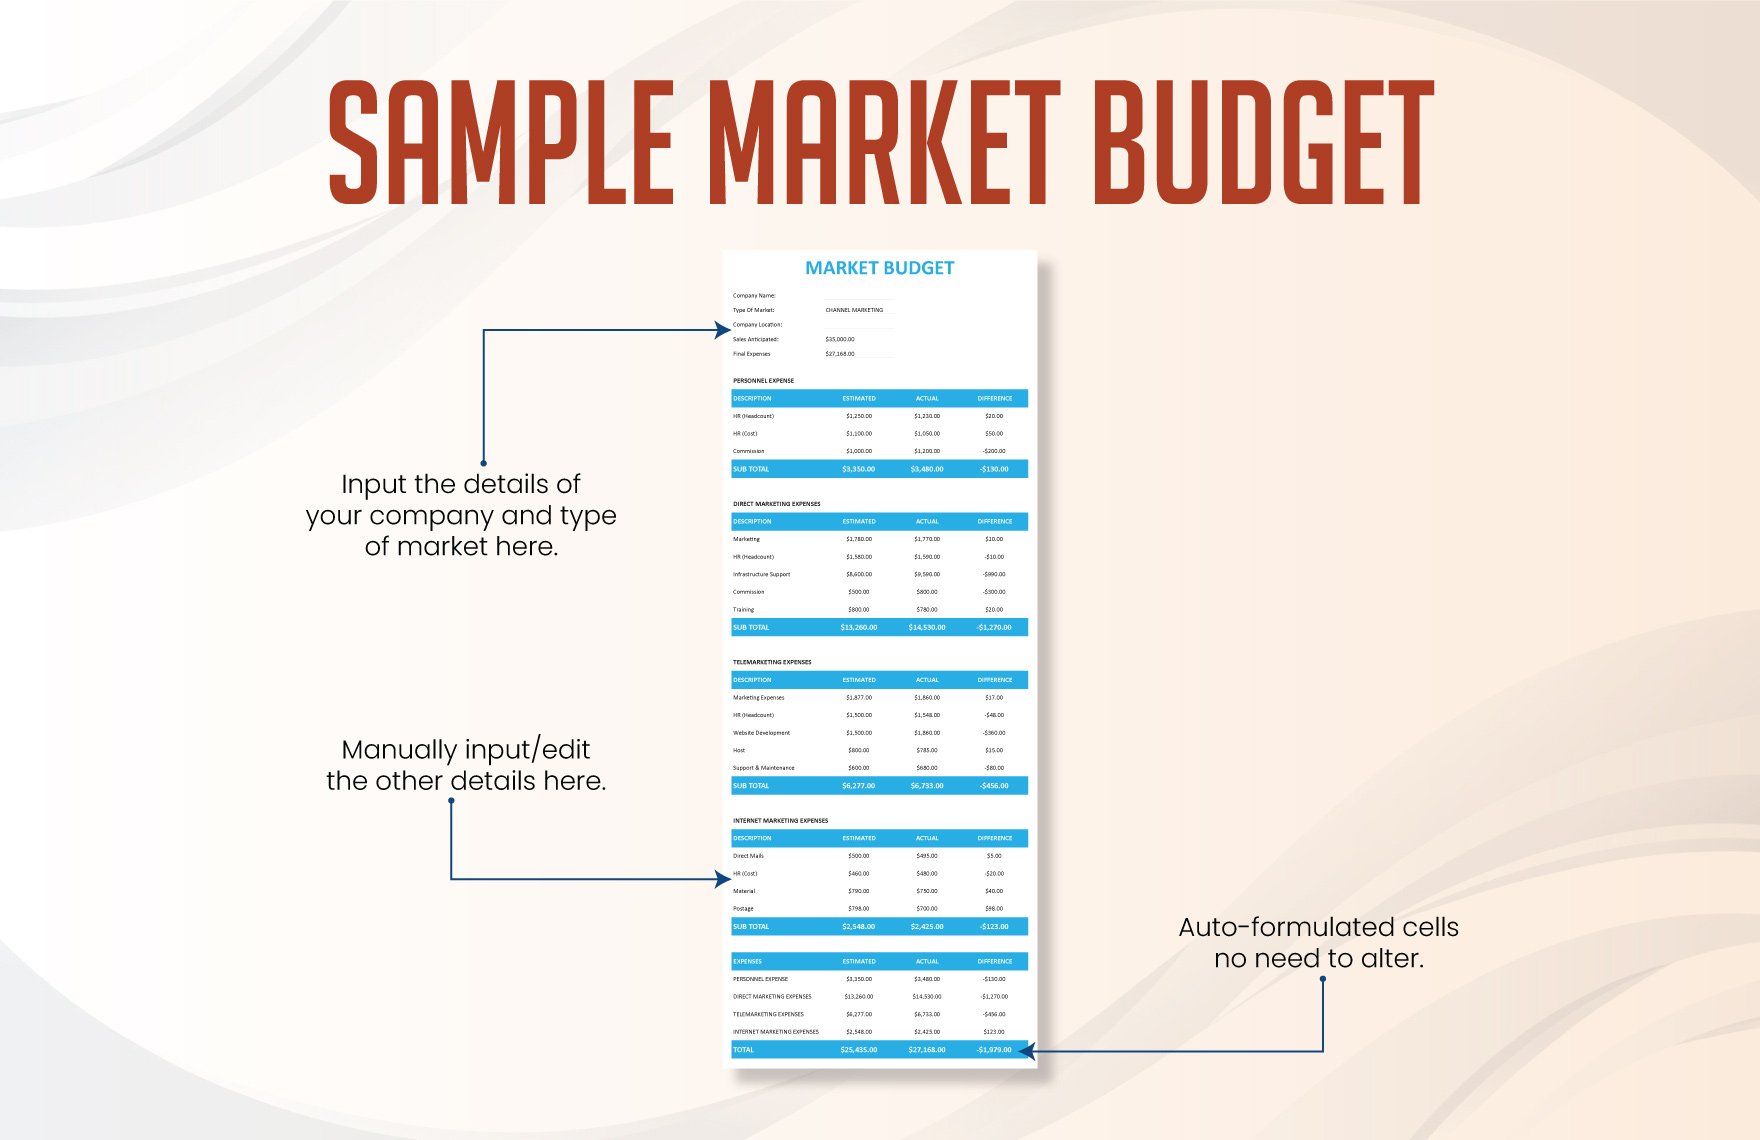 Sample Market Budget Template